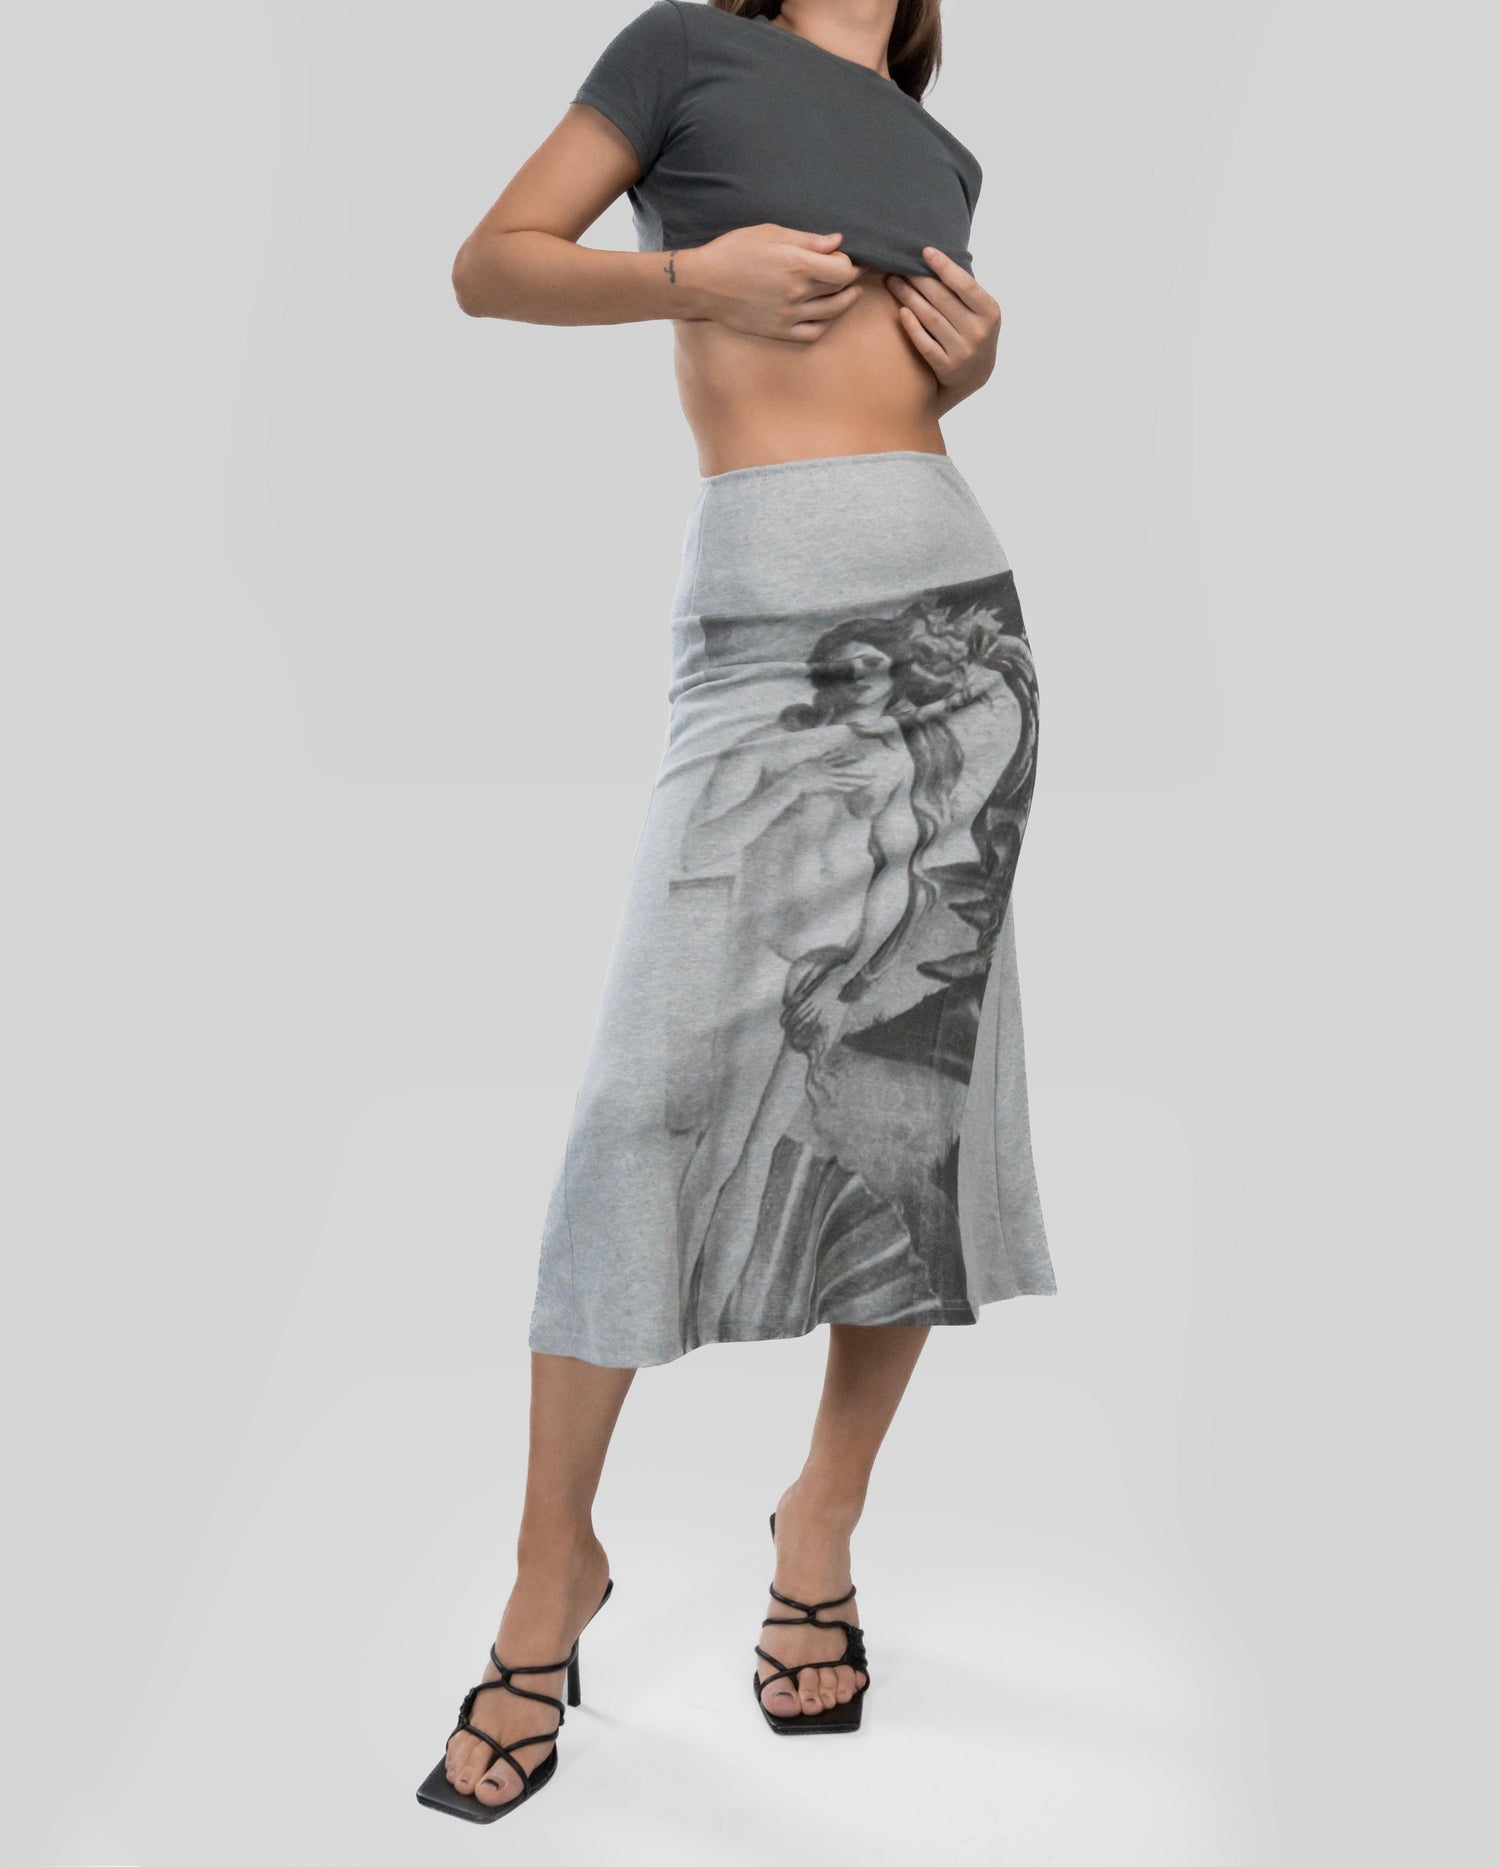 Reese Venus Graphic Flare Skirt / Grey - The Bekk